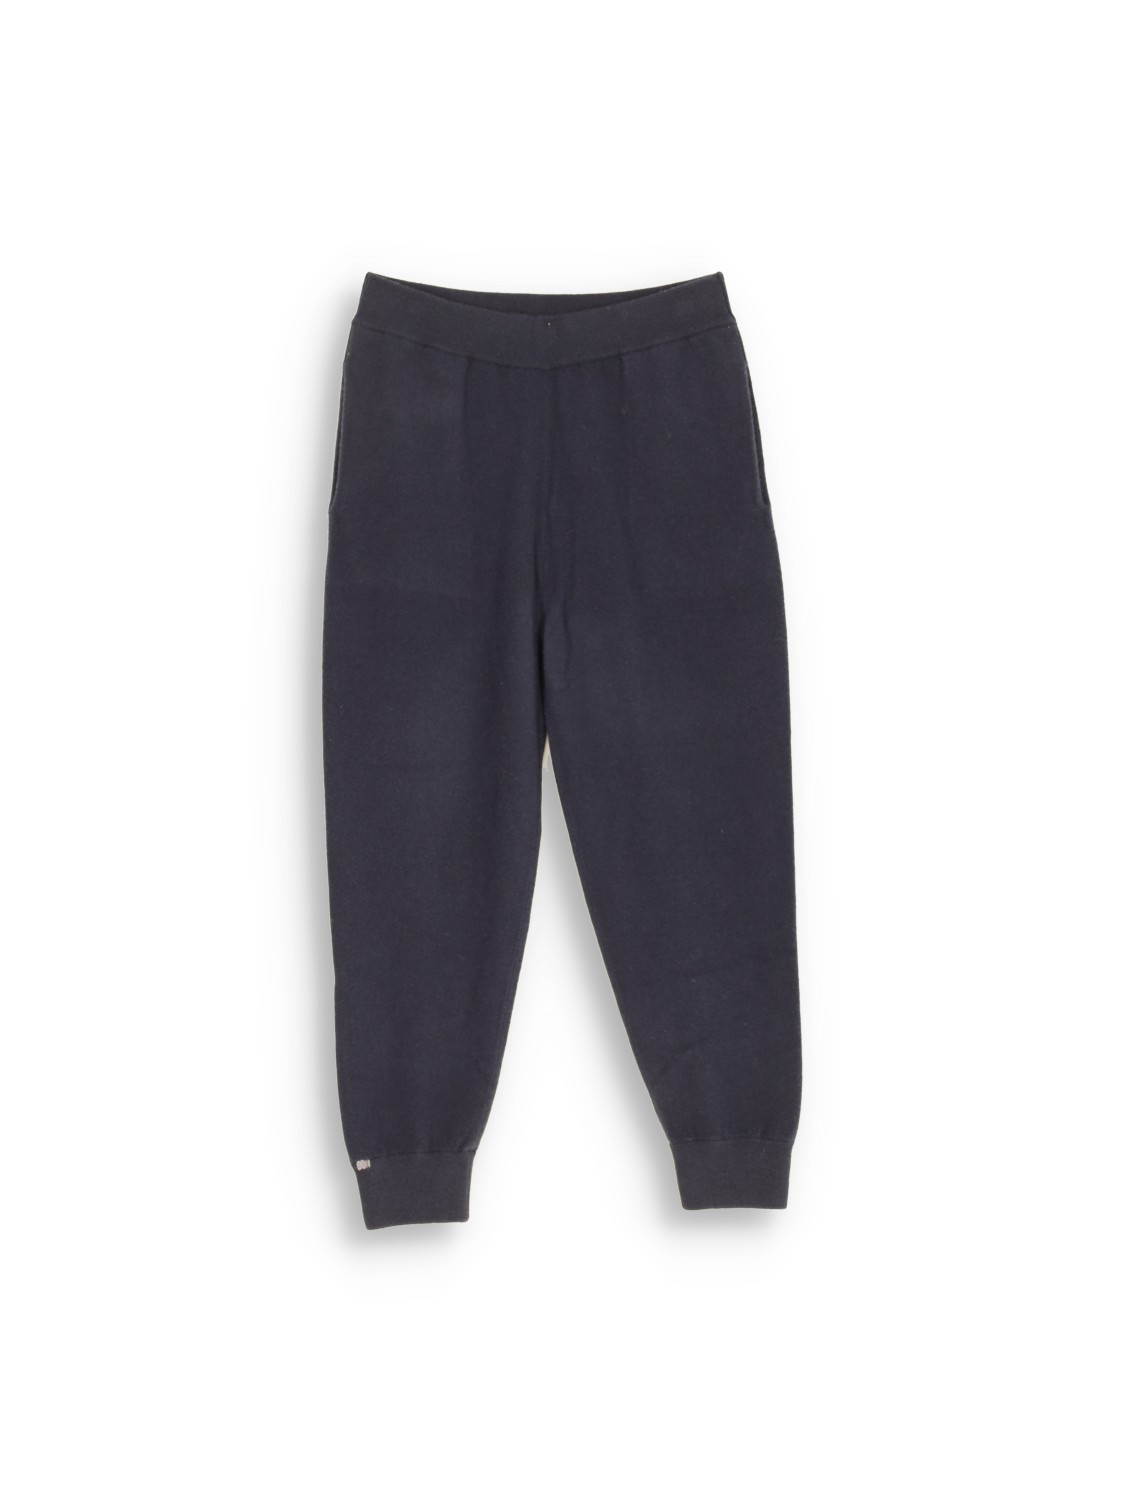 Pants Yogi - sweatpants with elastic waistband made of cashmere